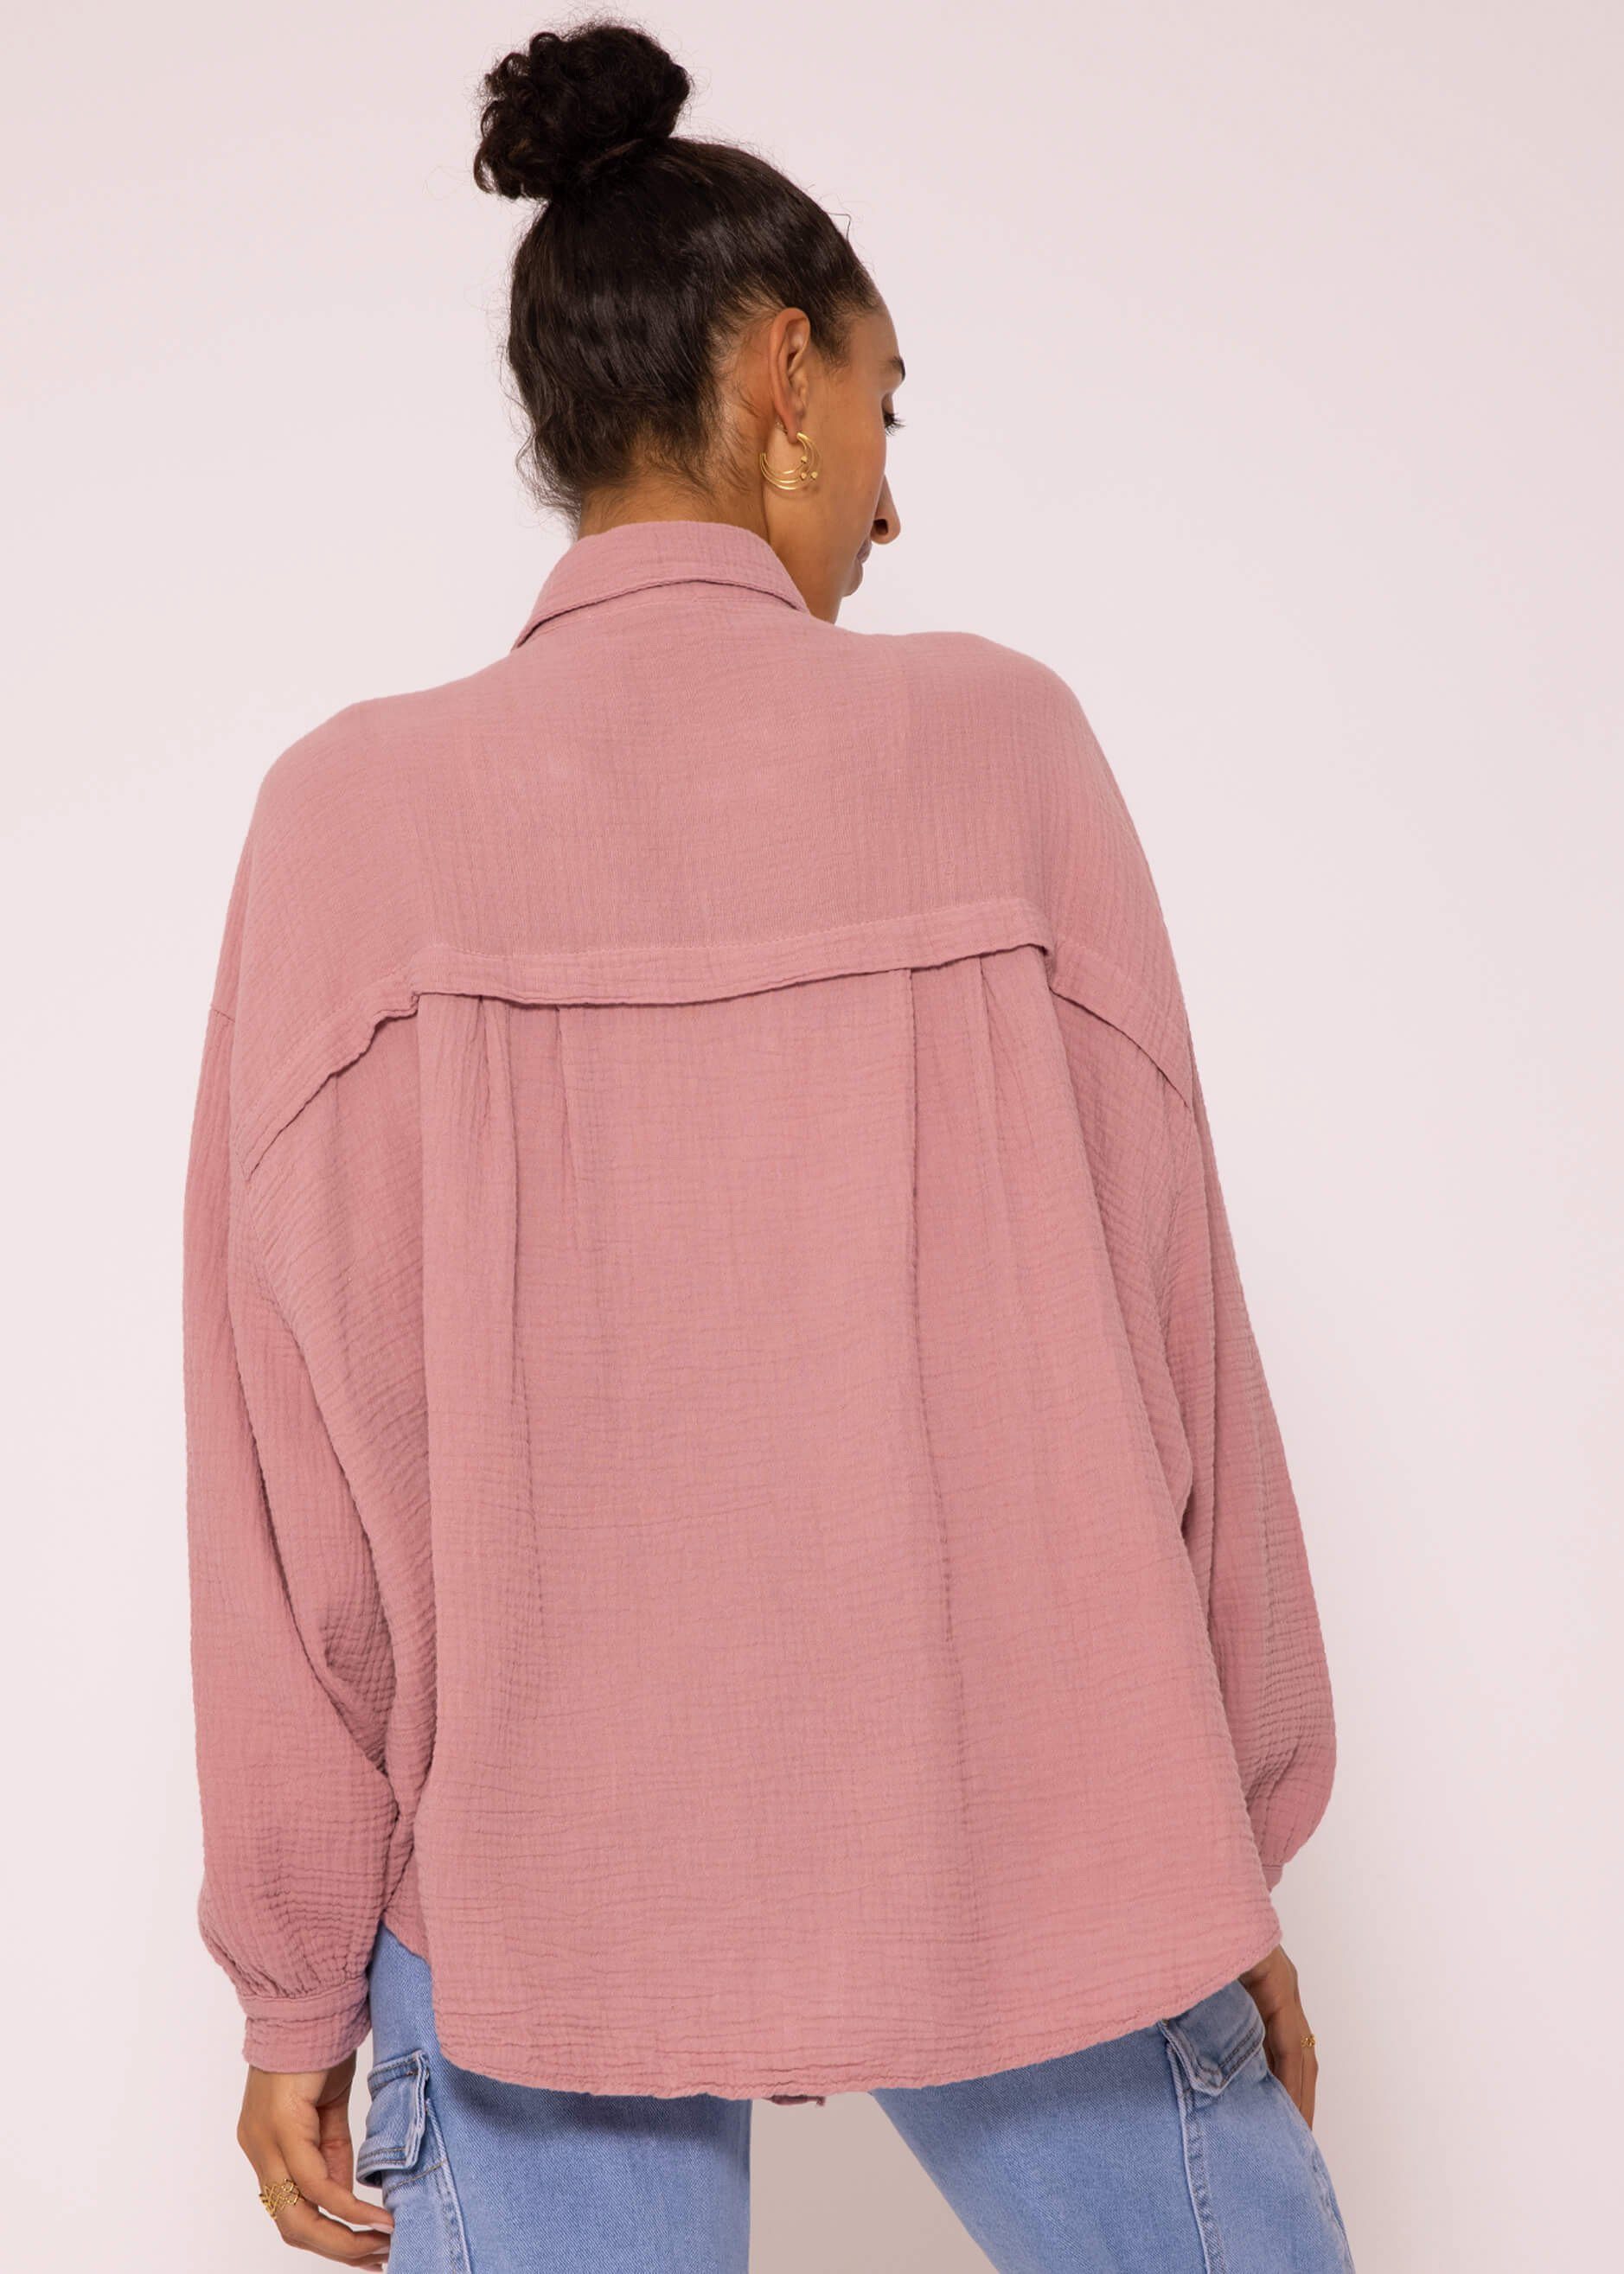 Longbluse Bluse Damen Altrosa Hemdbluse aus Langarm mit V-Ausschnitt, Musselin (Gr. SASSYCLASSY 36-48) One Baumwolle Size Oversize lang